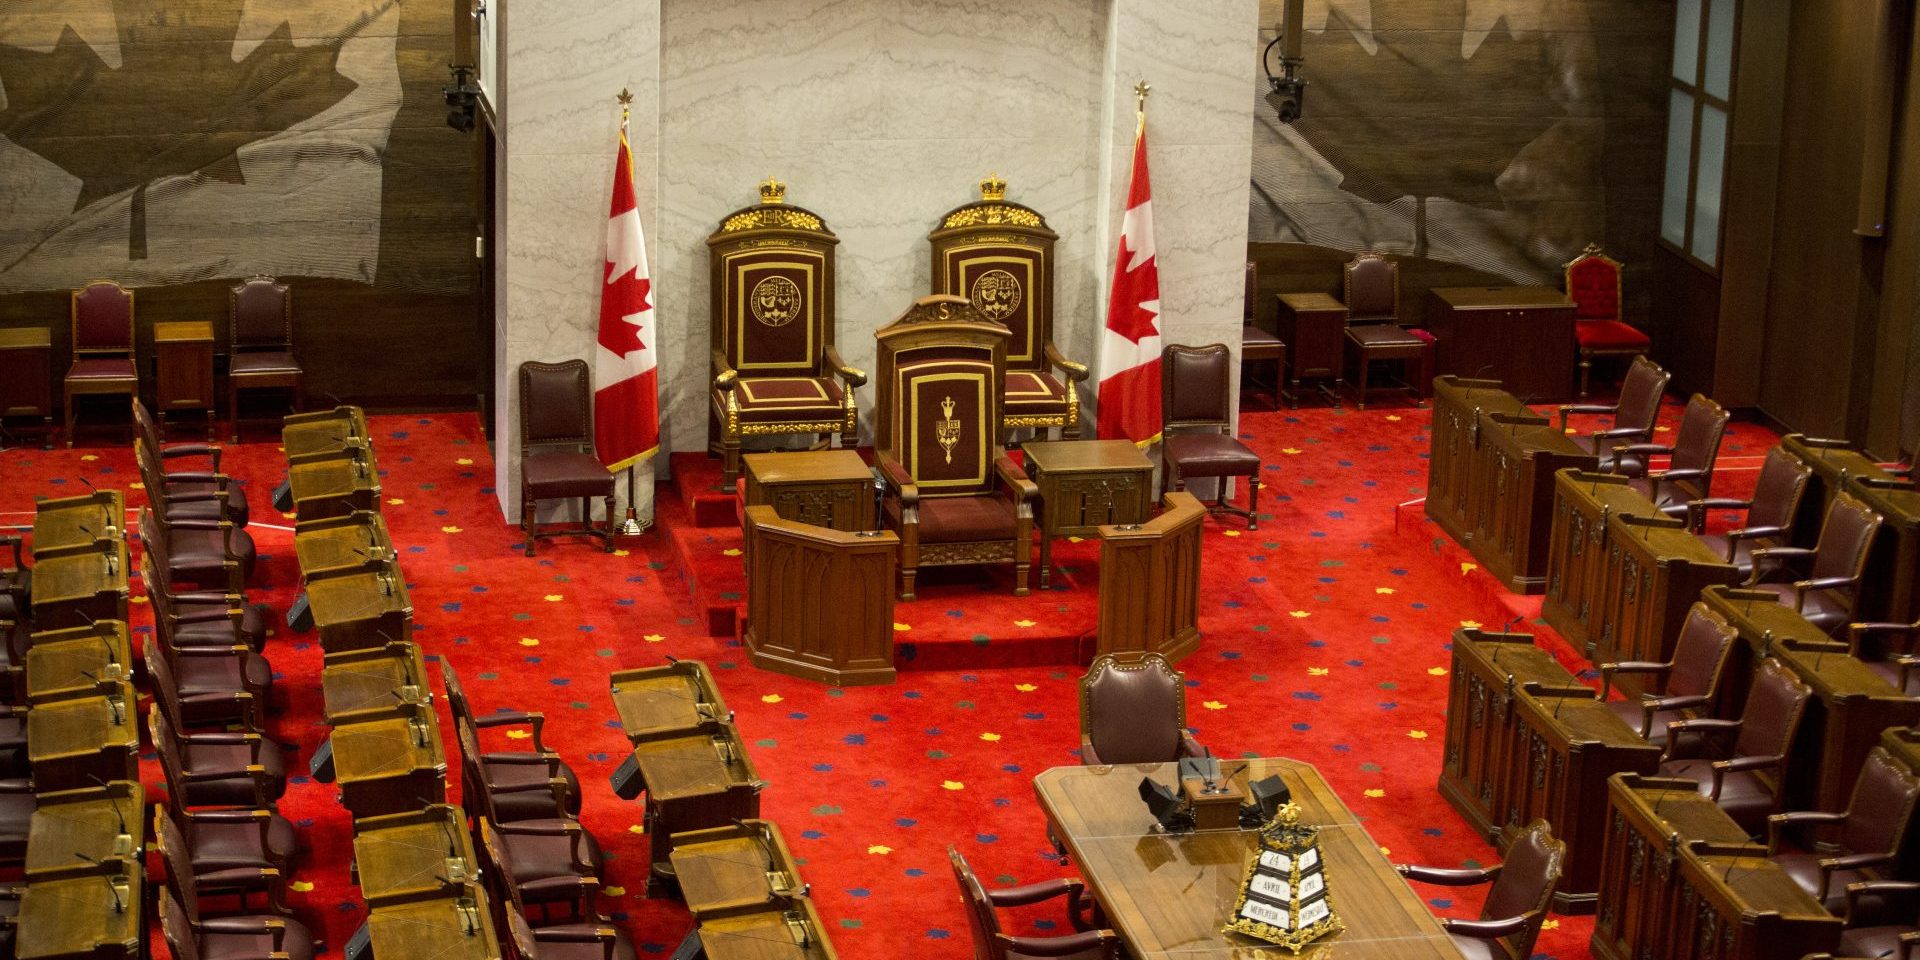 Senate Chamber in Senate of Canada Building